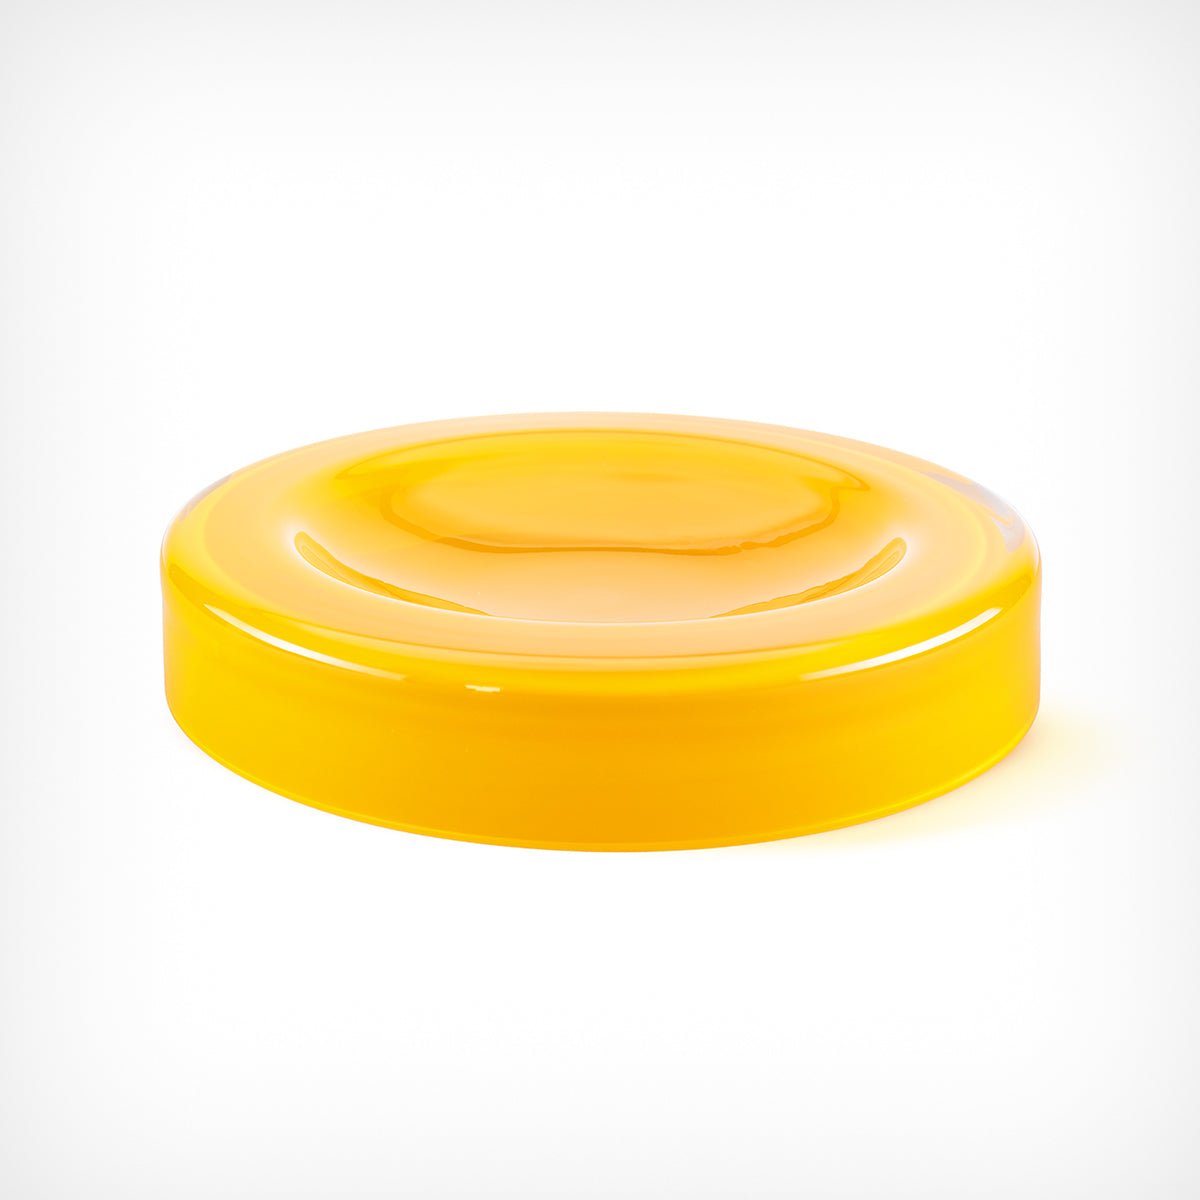 Schale „WET Bowl” Yellow Ursula Futura – diesellerie.com